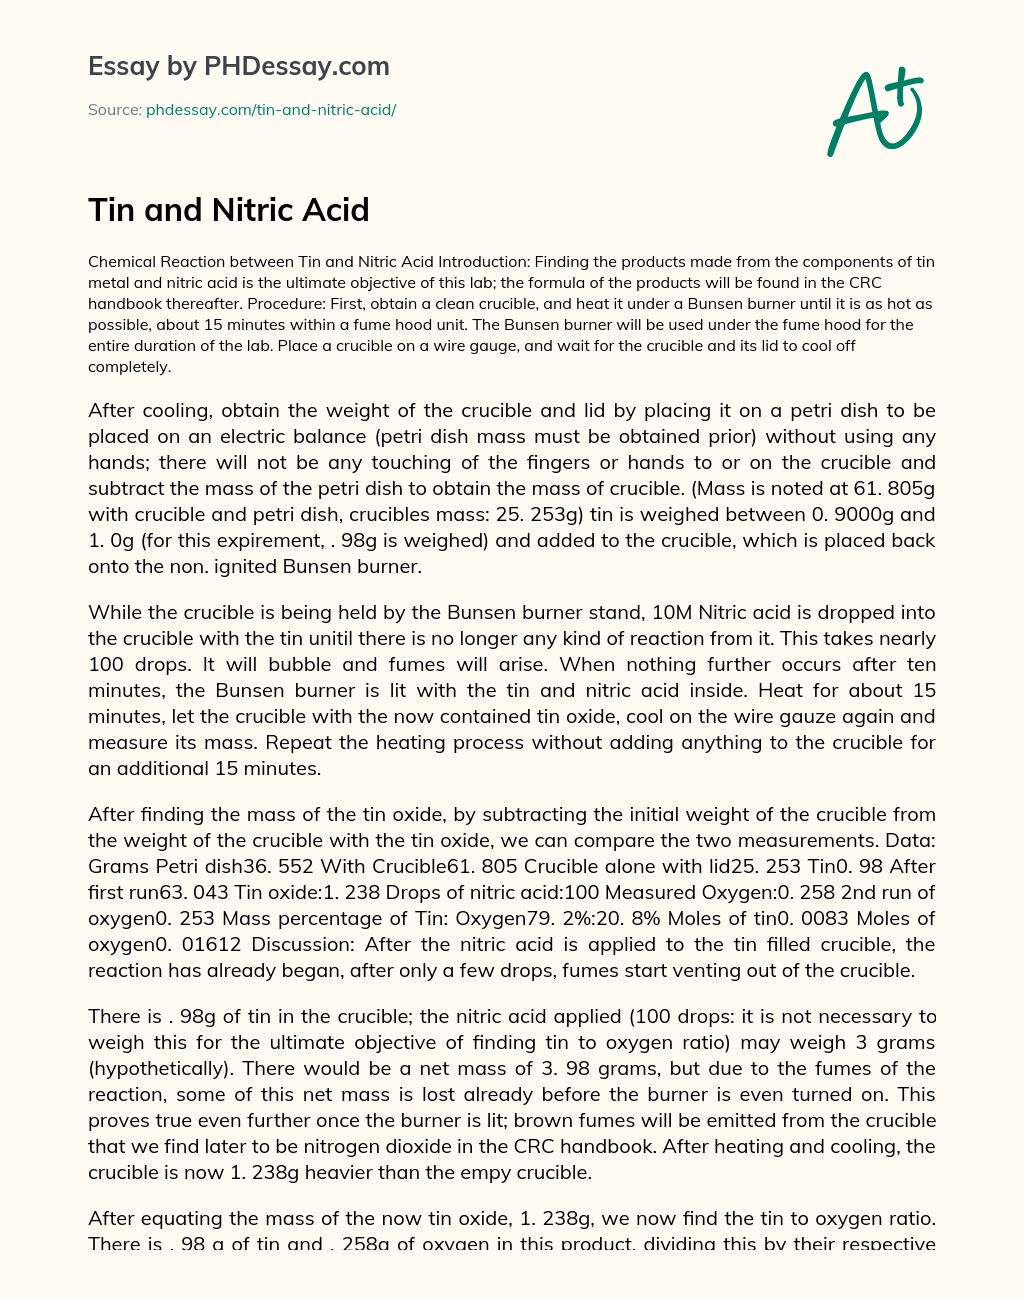 Tin and Nitric Acid essay